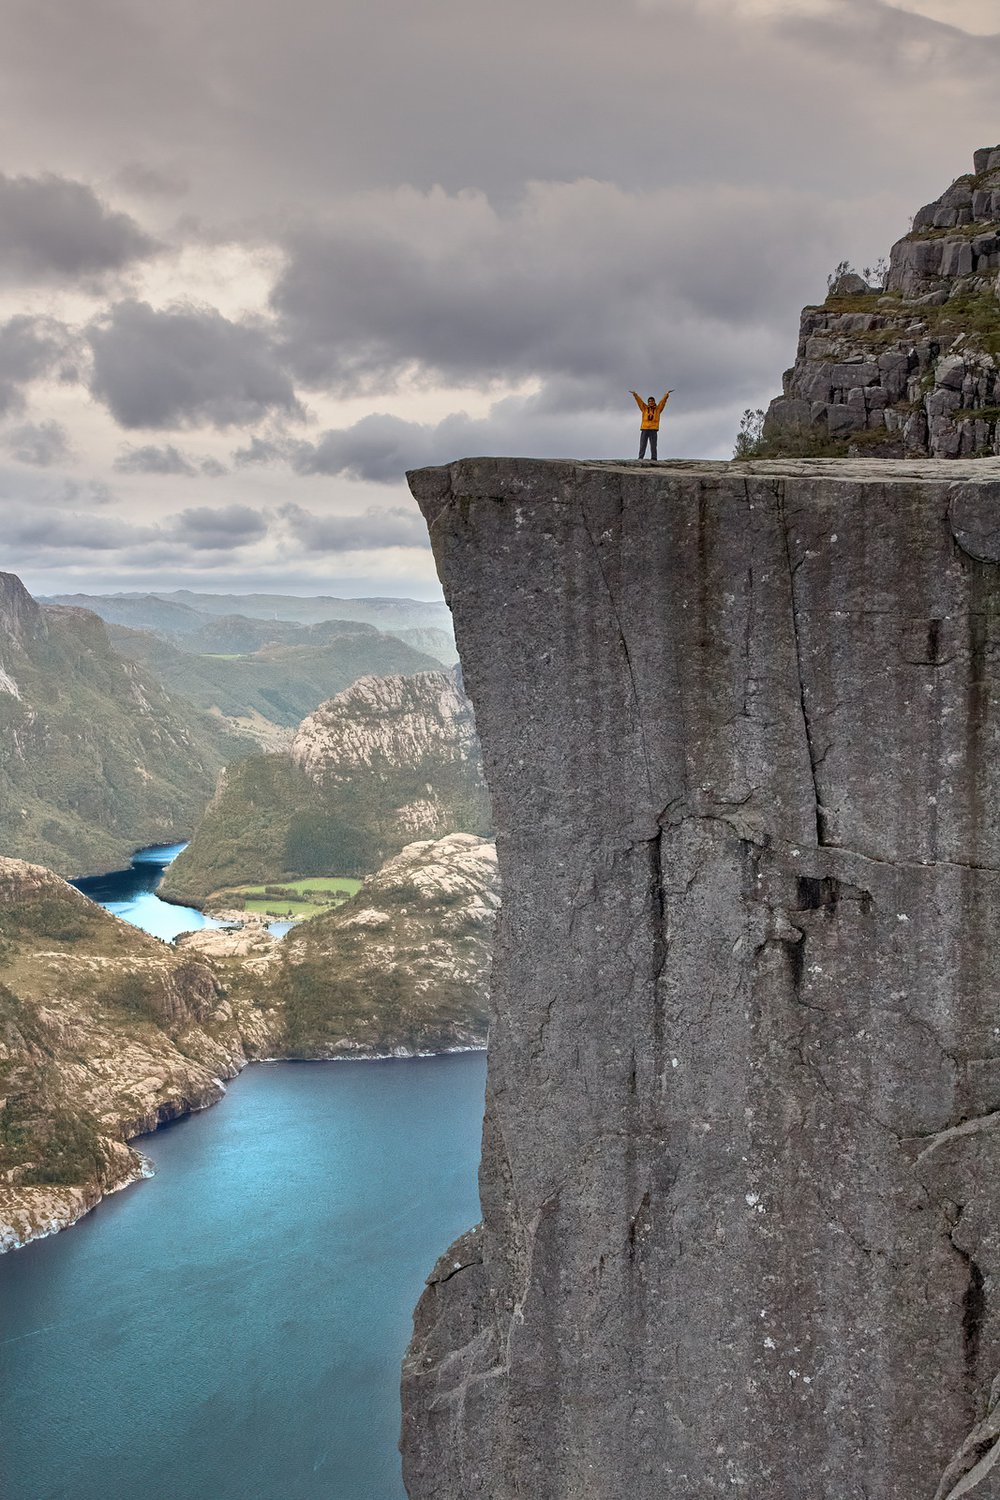 Прекестолен – гигантский утёс в Норвегии